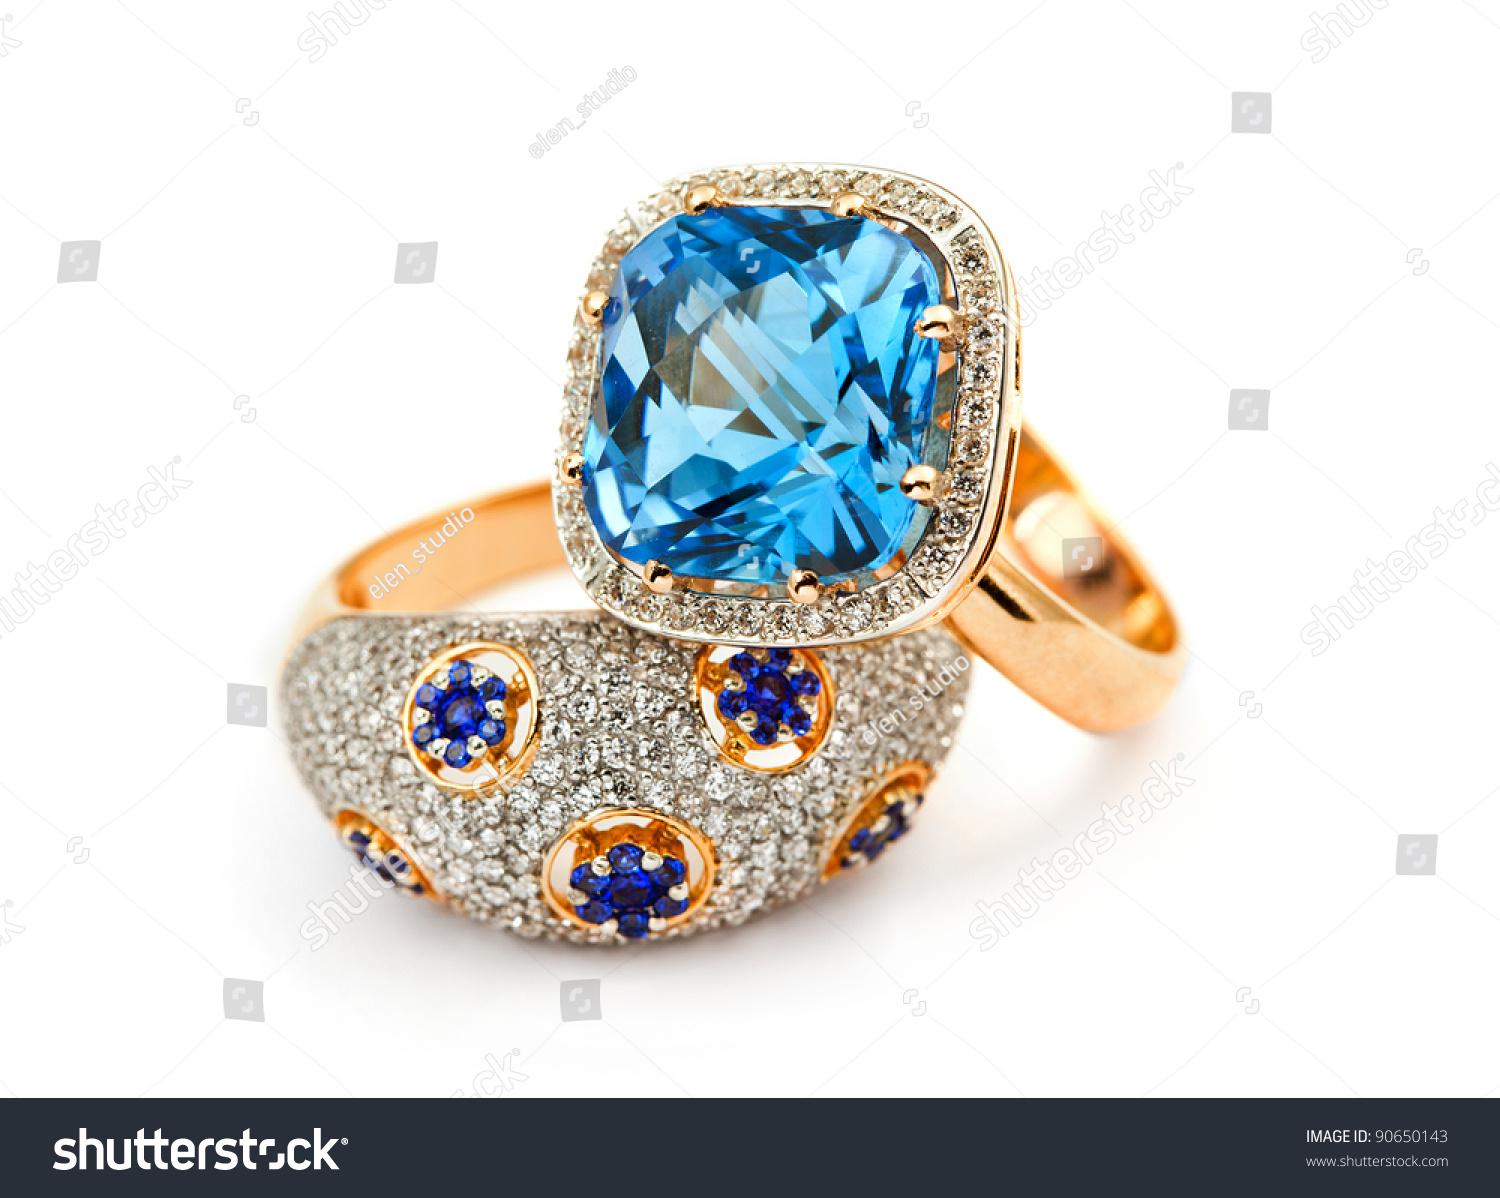 Elegant jewelry ring with jewel stone sapphire #90650143